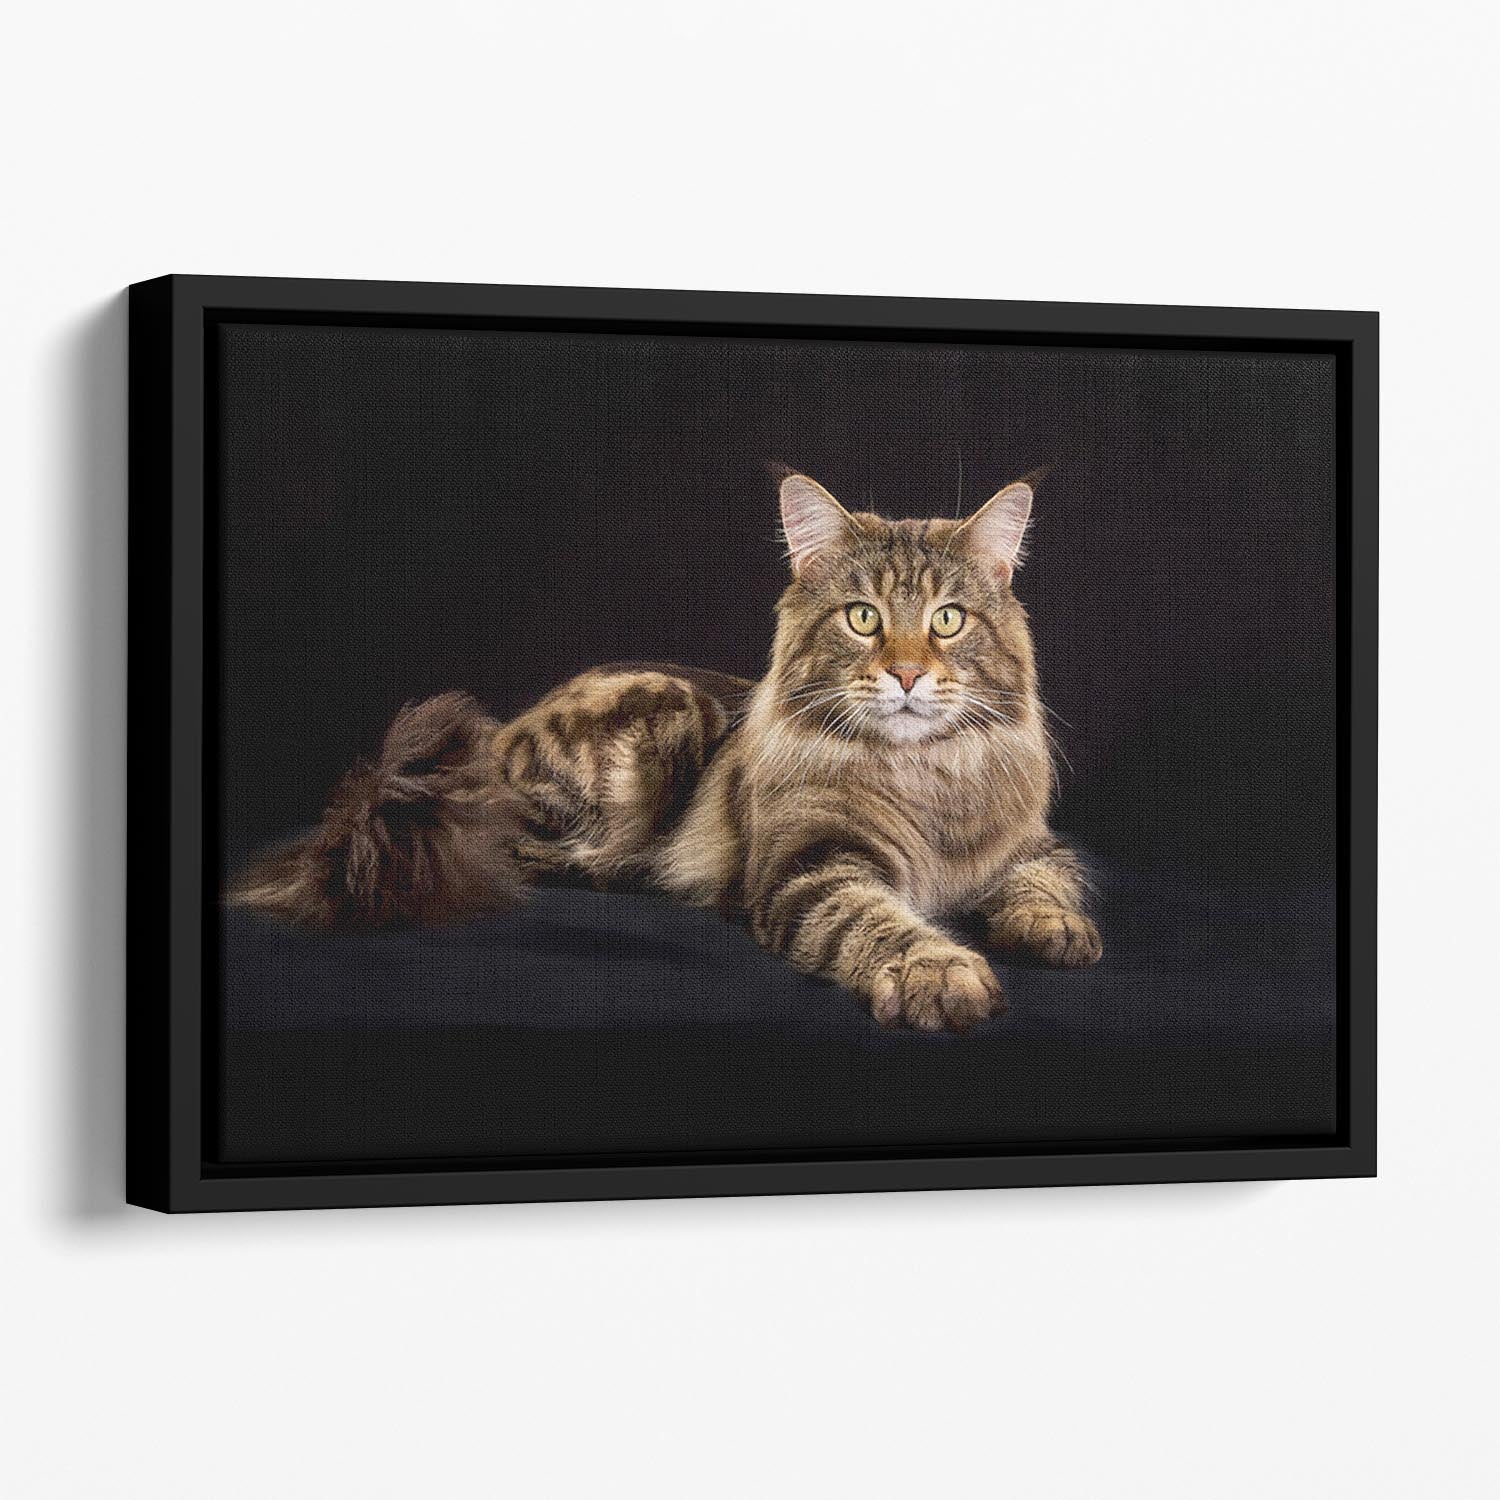 Purebred Maine Coon cat Floating Framed Canvas - Canvas Art Rocks - 1